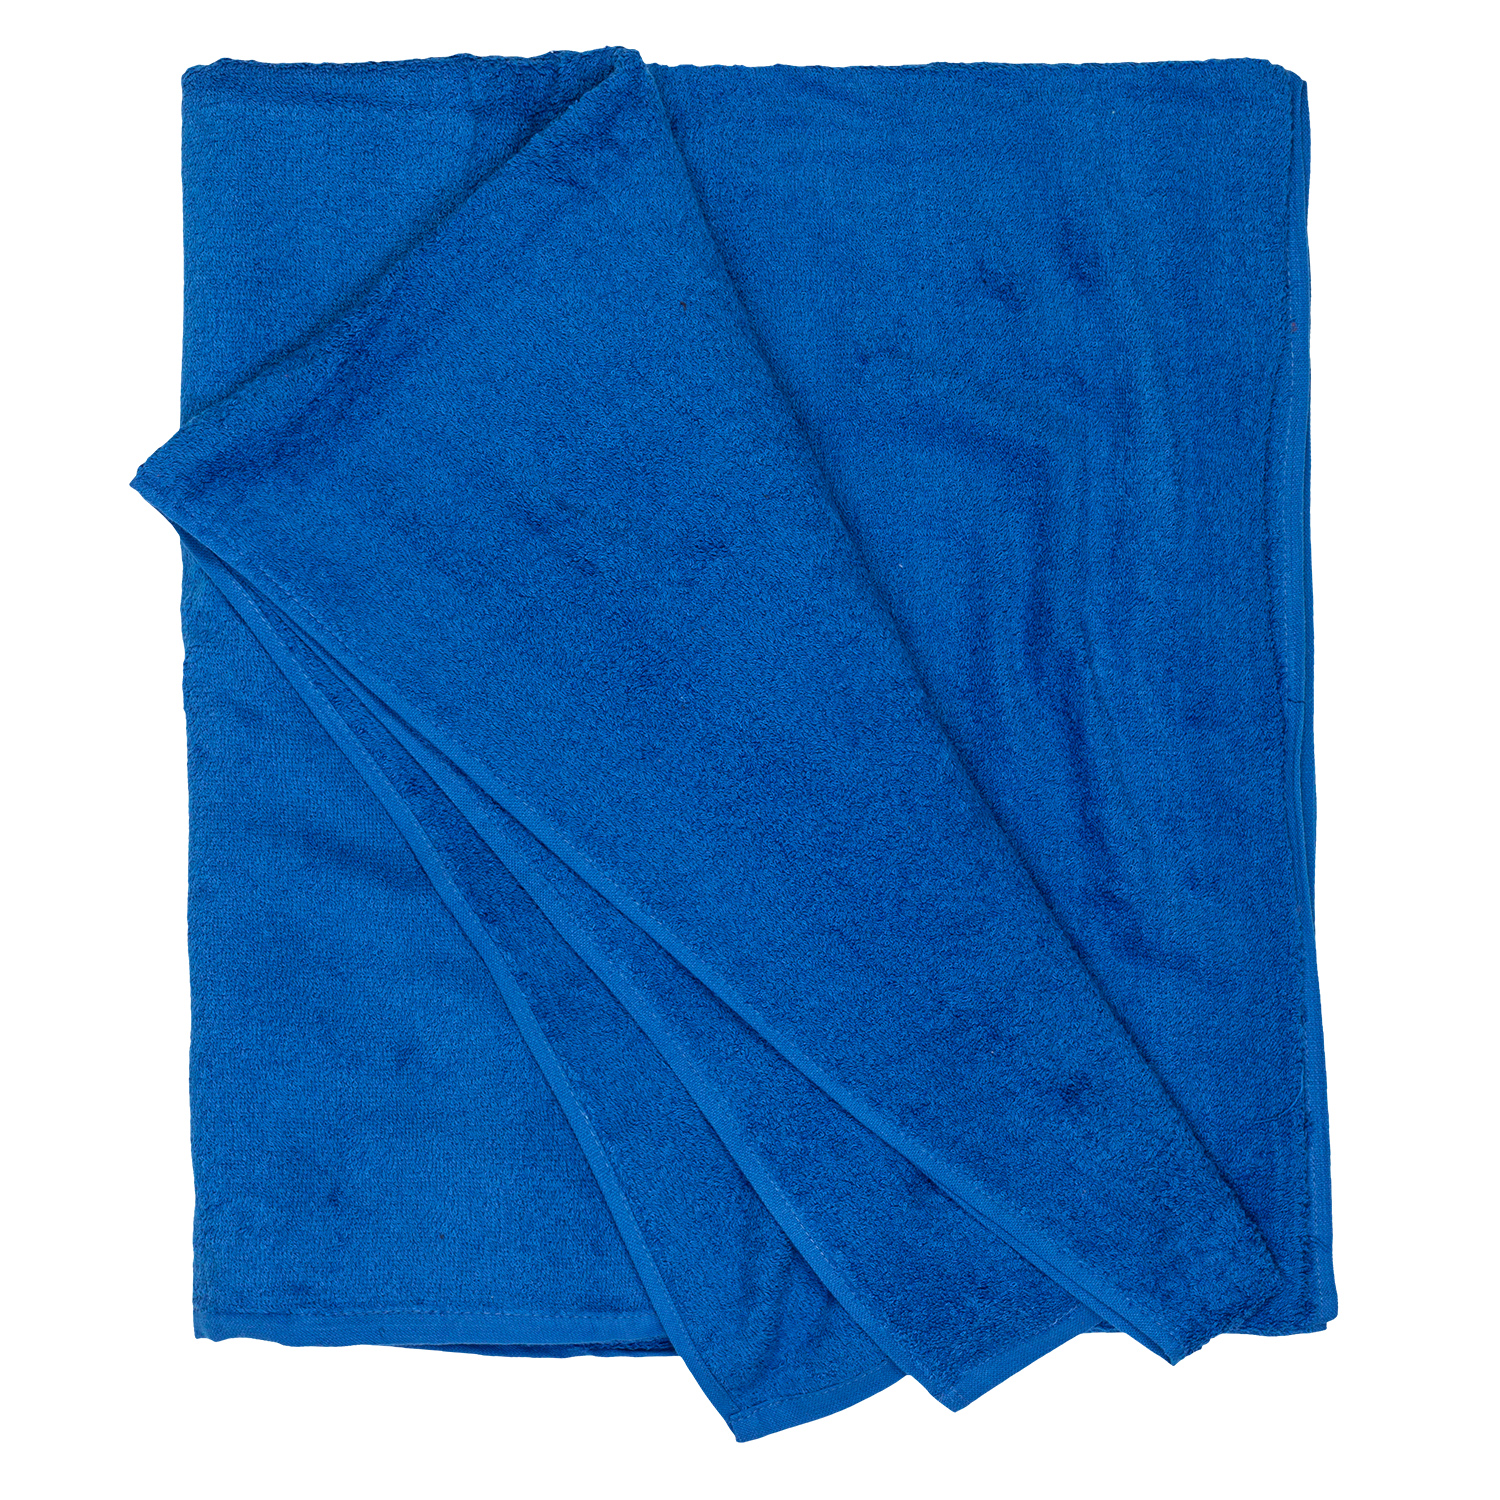 Bath towel series Helsinki in royal blue by Adamo in large sizes 100x220 cm or 155x220 cm